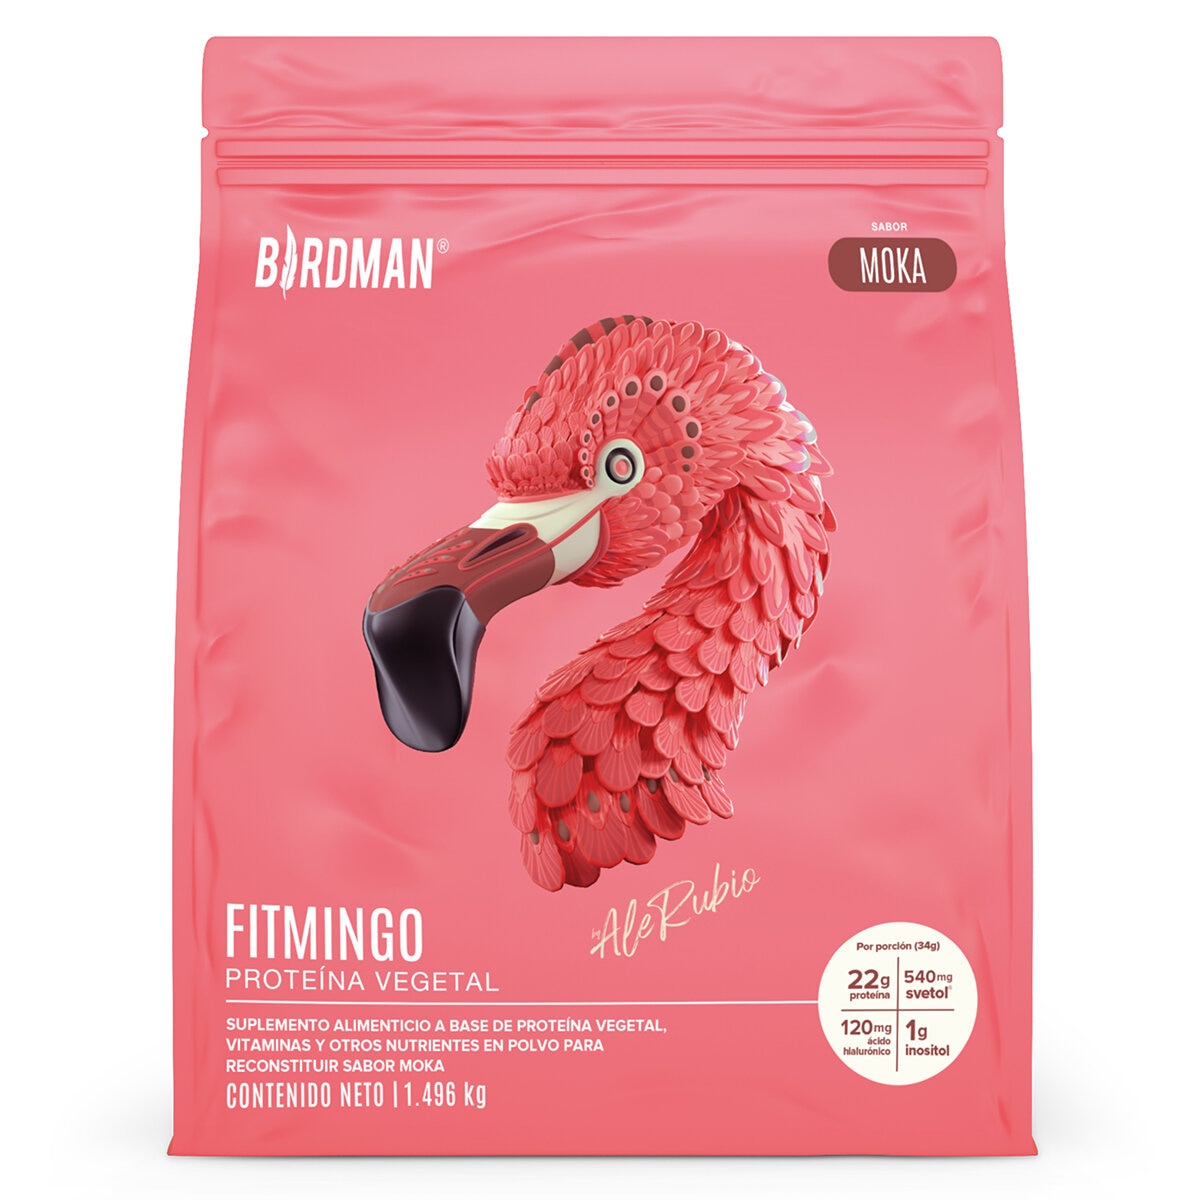 Birdman Fitmingo Proteína Vegetal Sabor Moka 1.496 kg